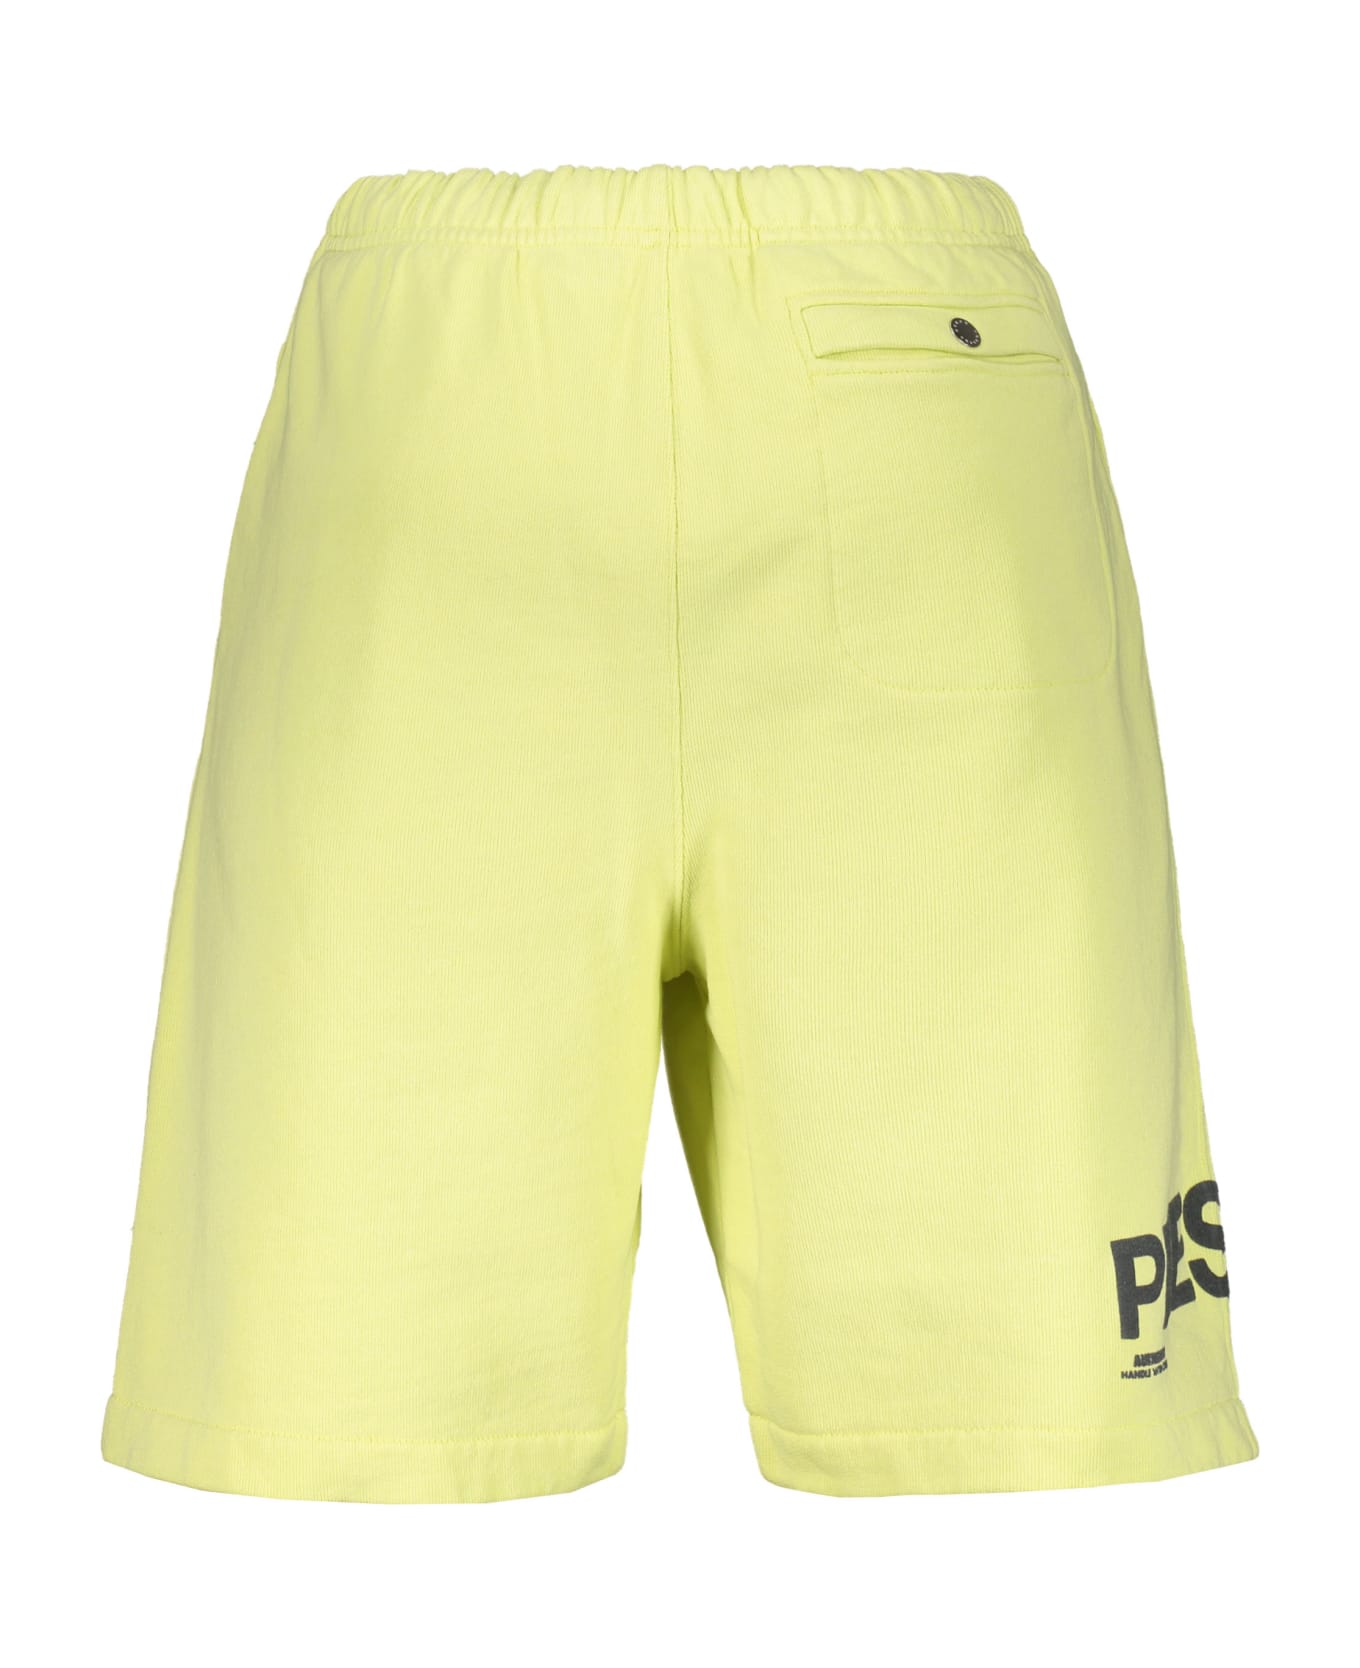 HERON PRESTON Fleece Shorts - Yellow